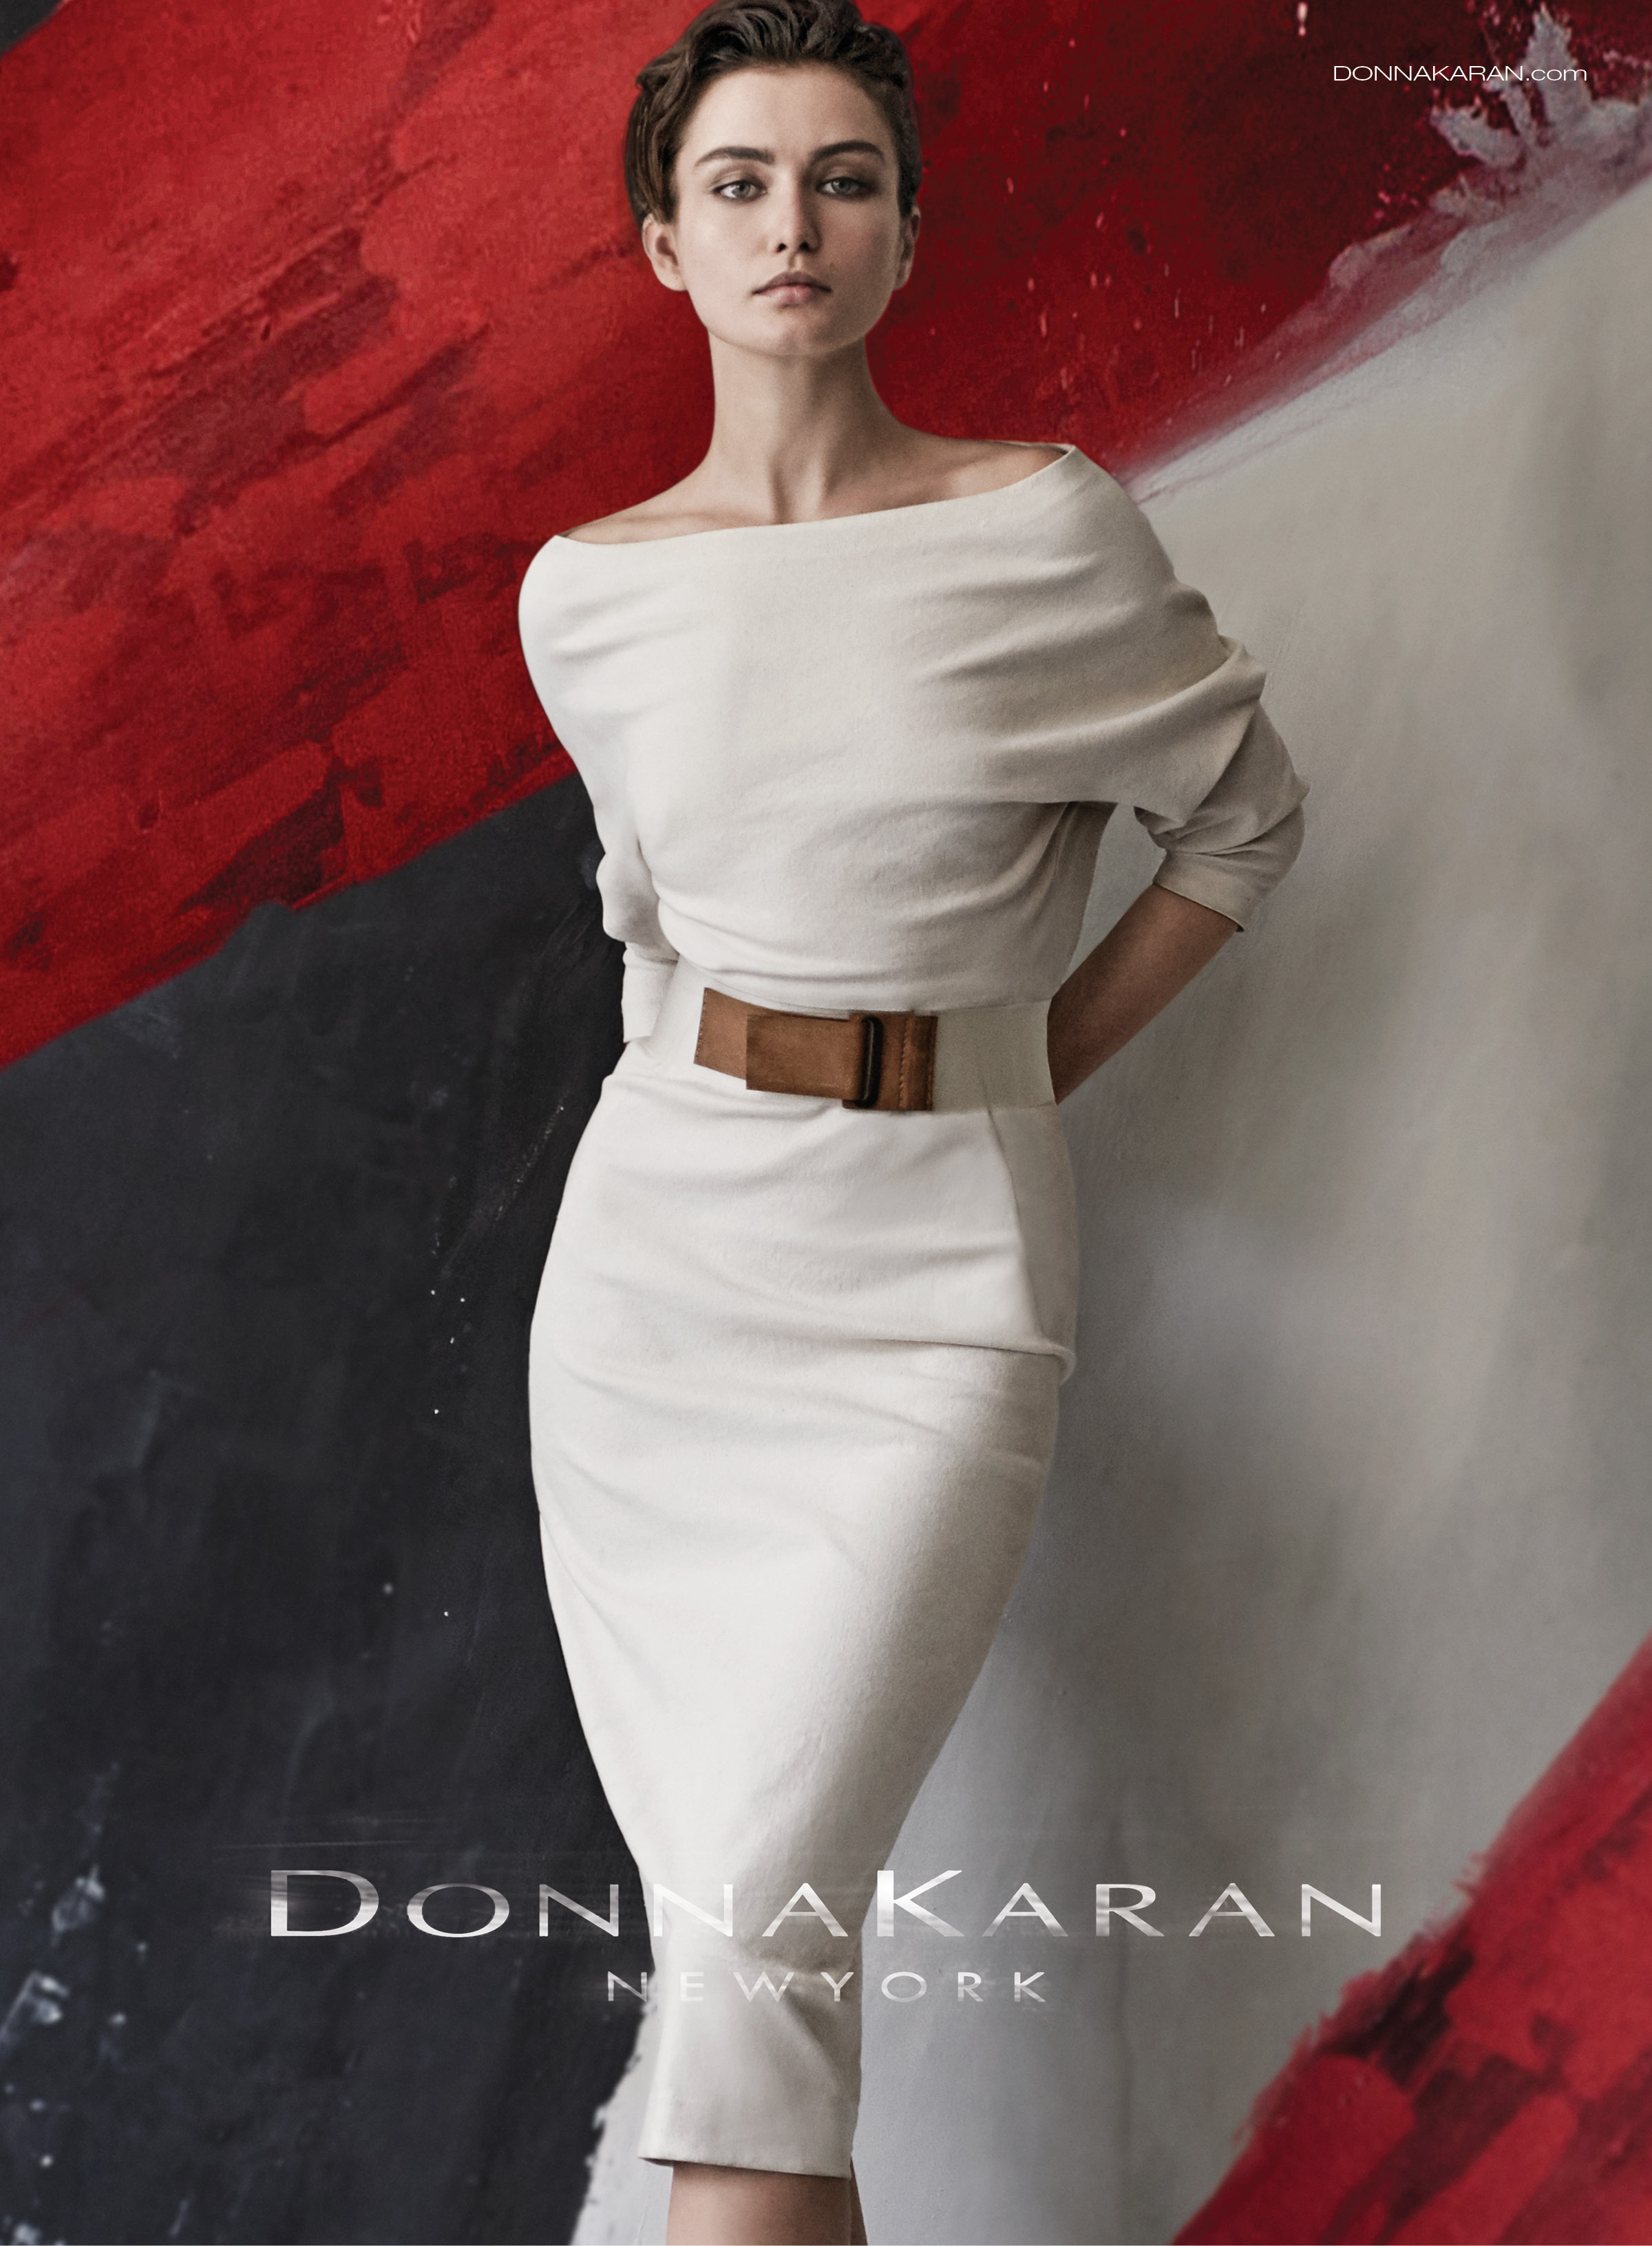 Donna Karan's Spring Campaign Captures A New York Moment